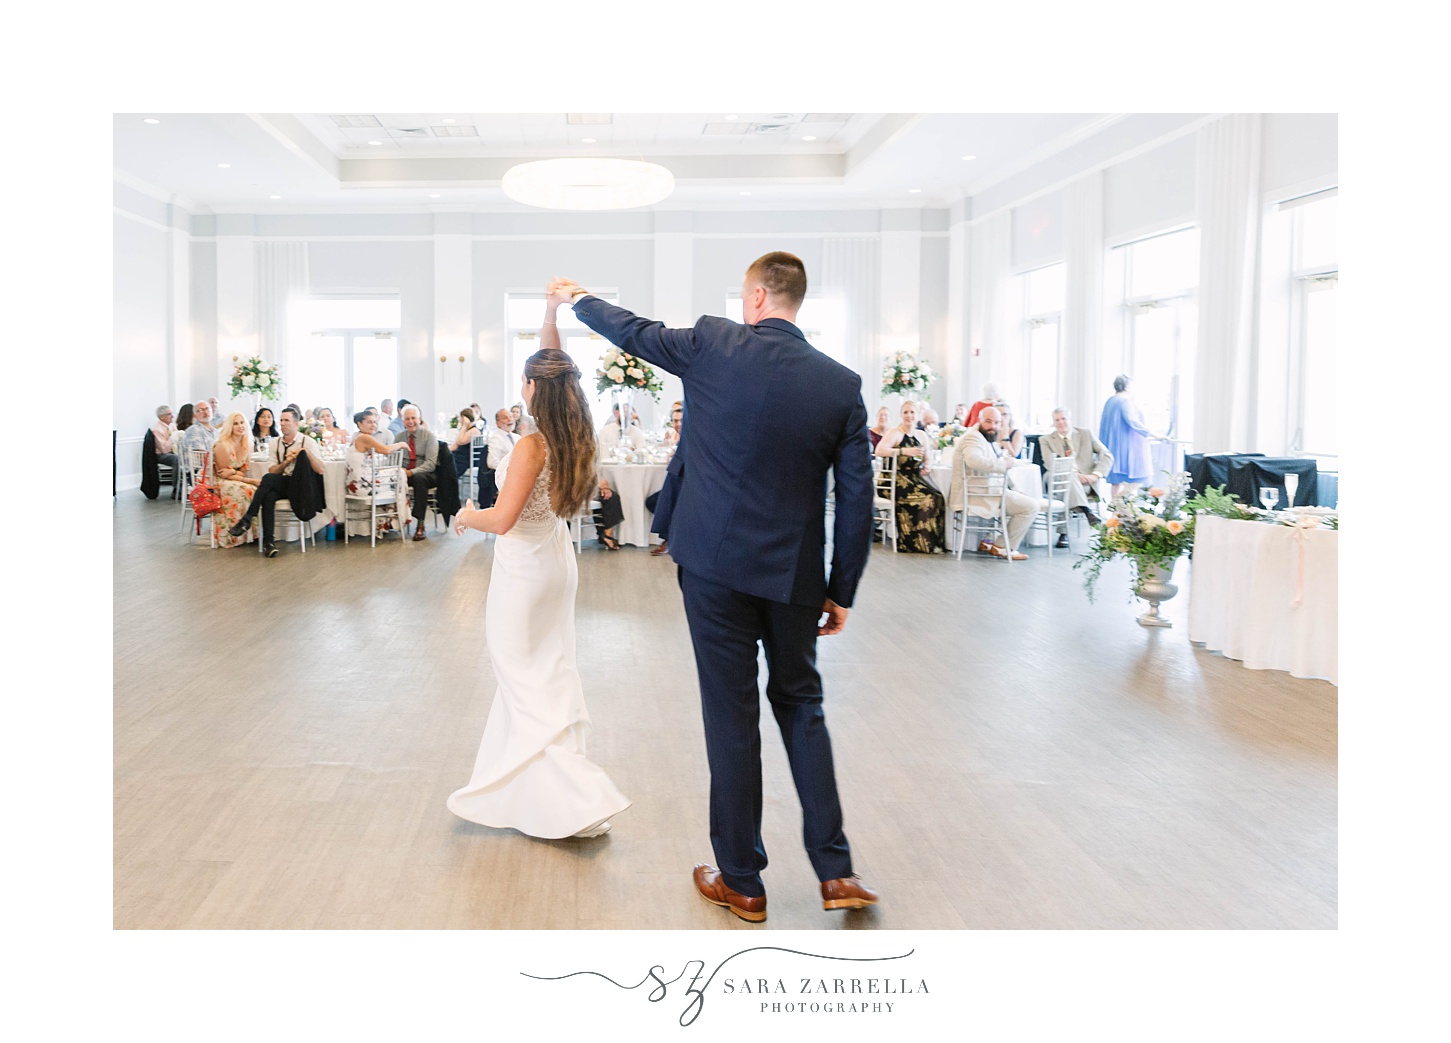 groom twirls bride during first dance at Newport RI wedding reception